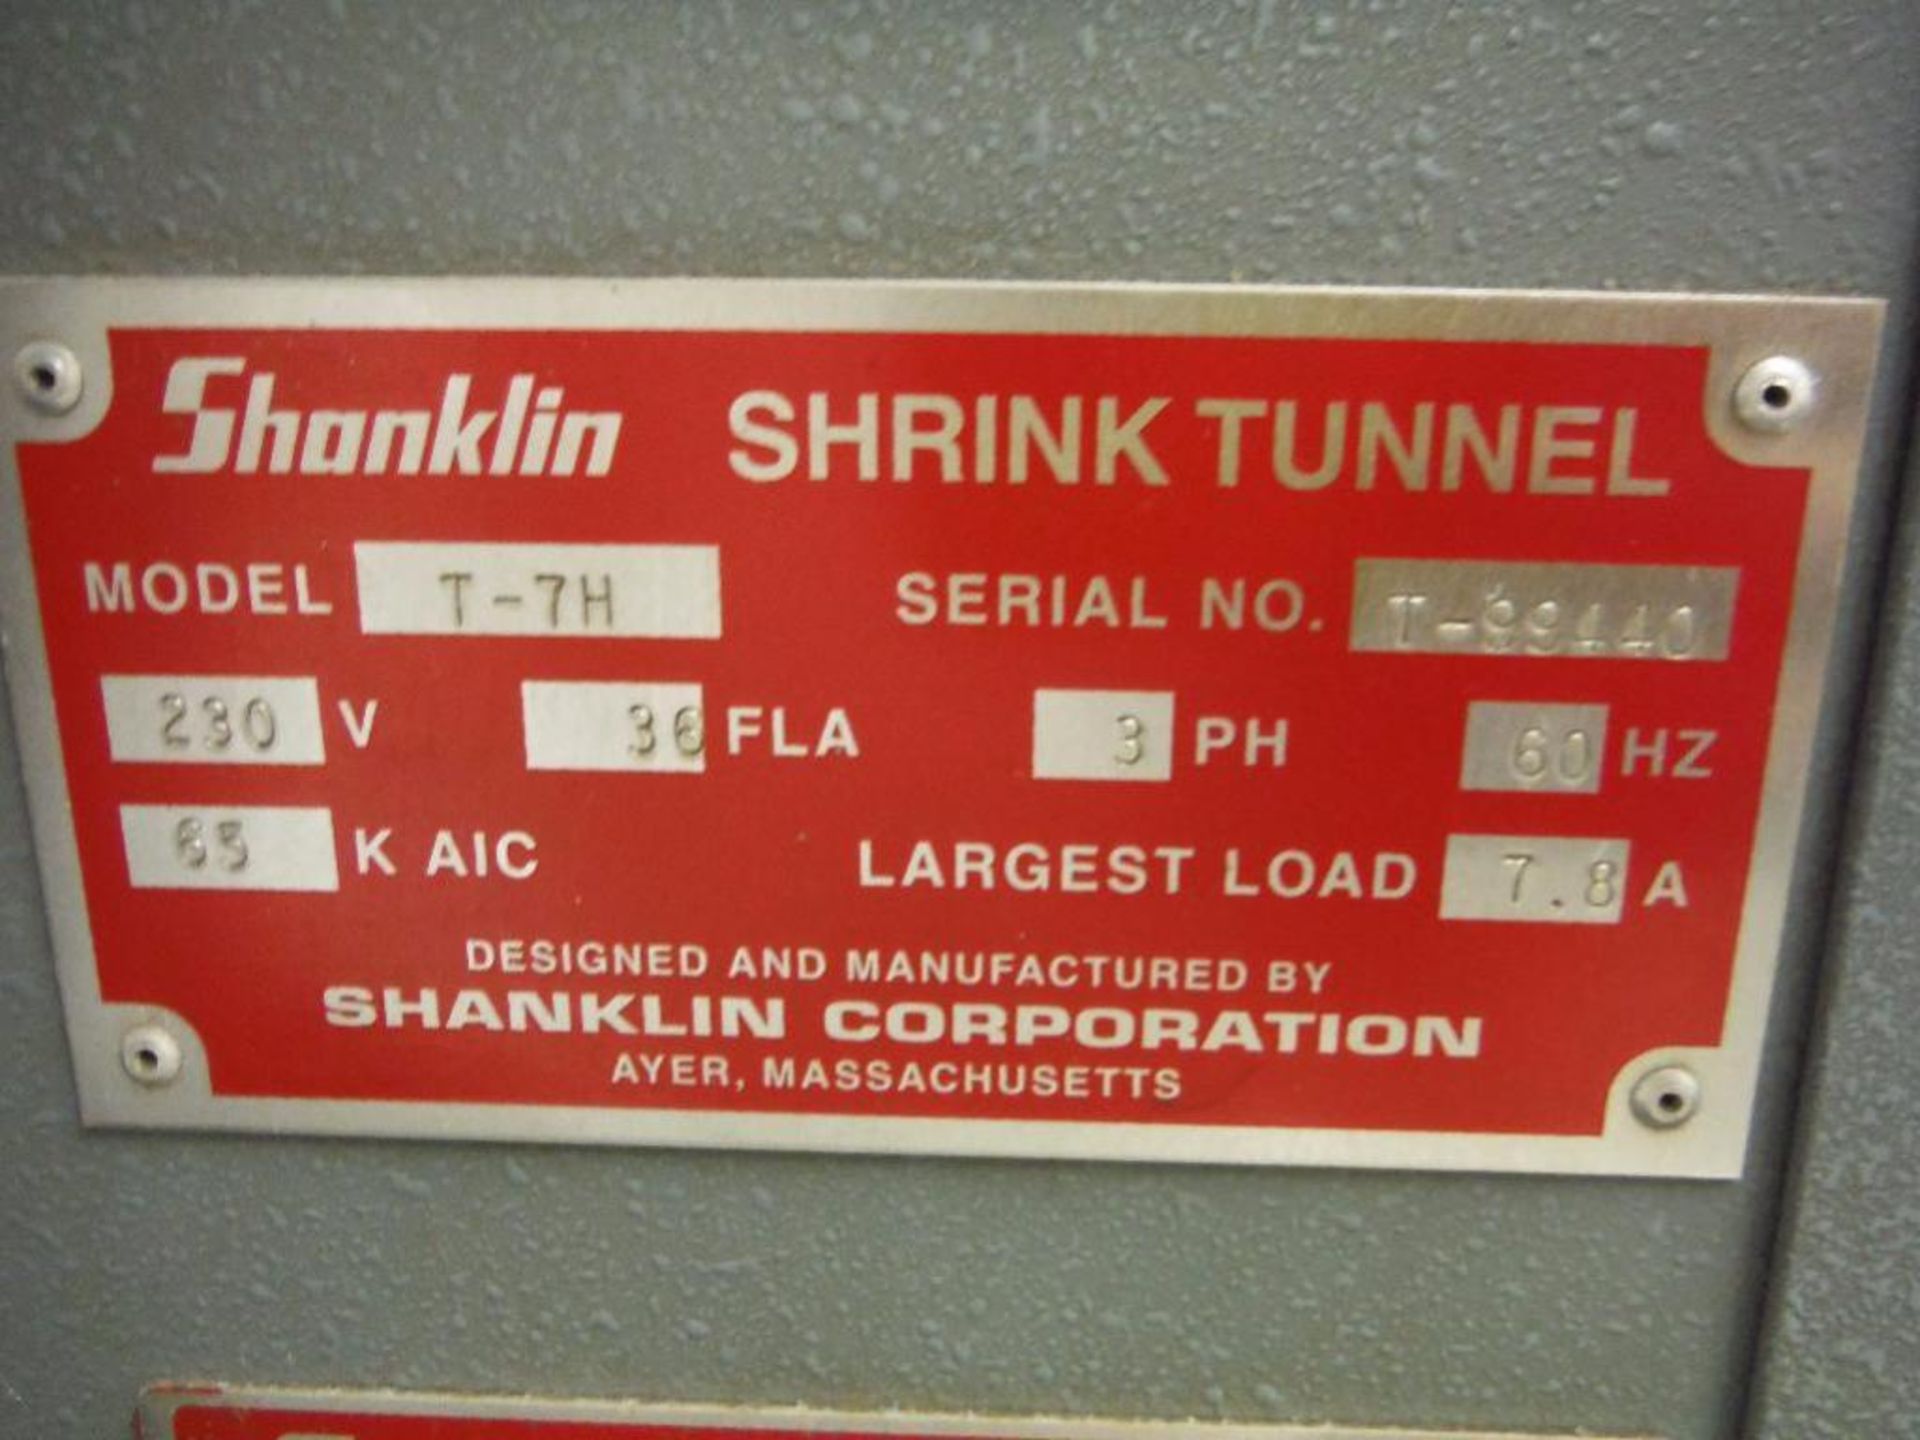 Shanklin shrink tunnel, Model T-7H, SN T-99440, tunnel 42 in. long x 15 in. wide x 12 in. - Image 7 of 7